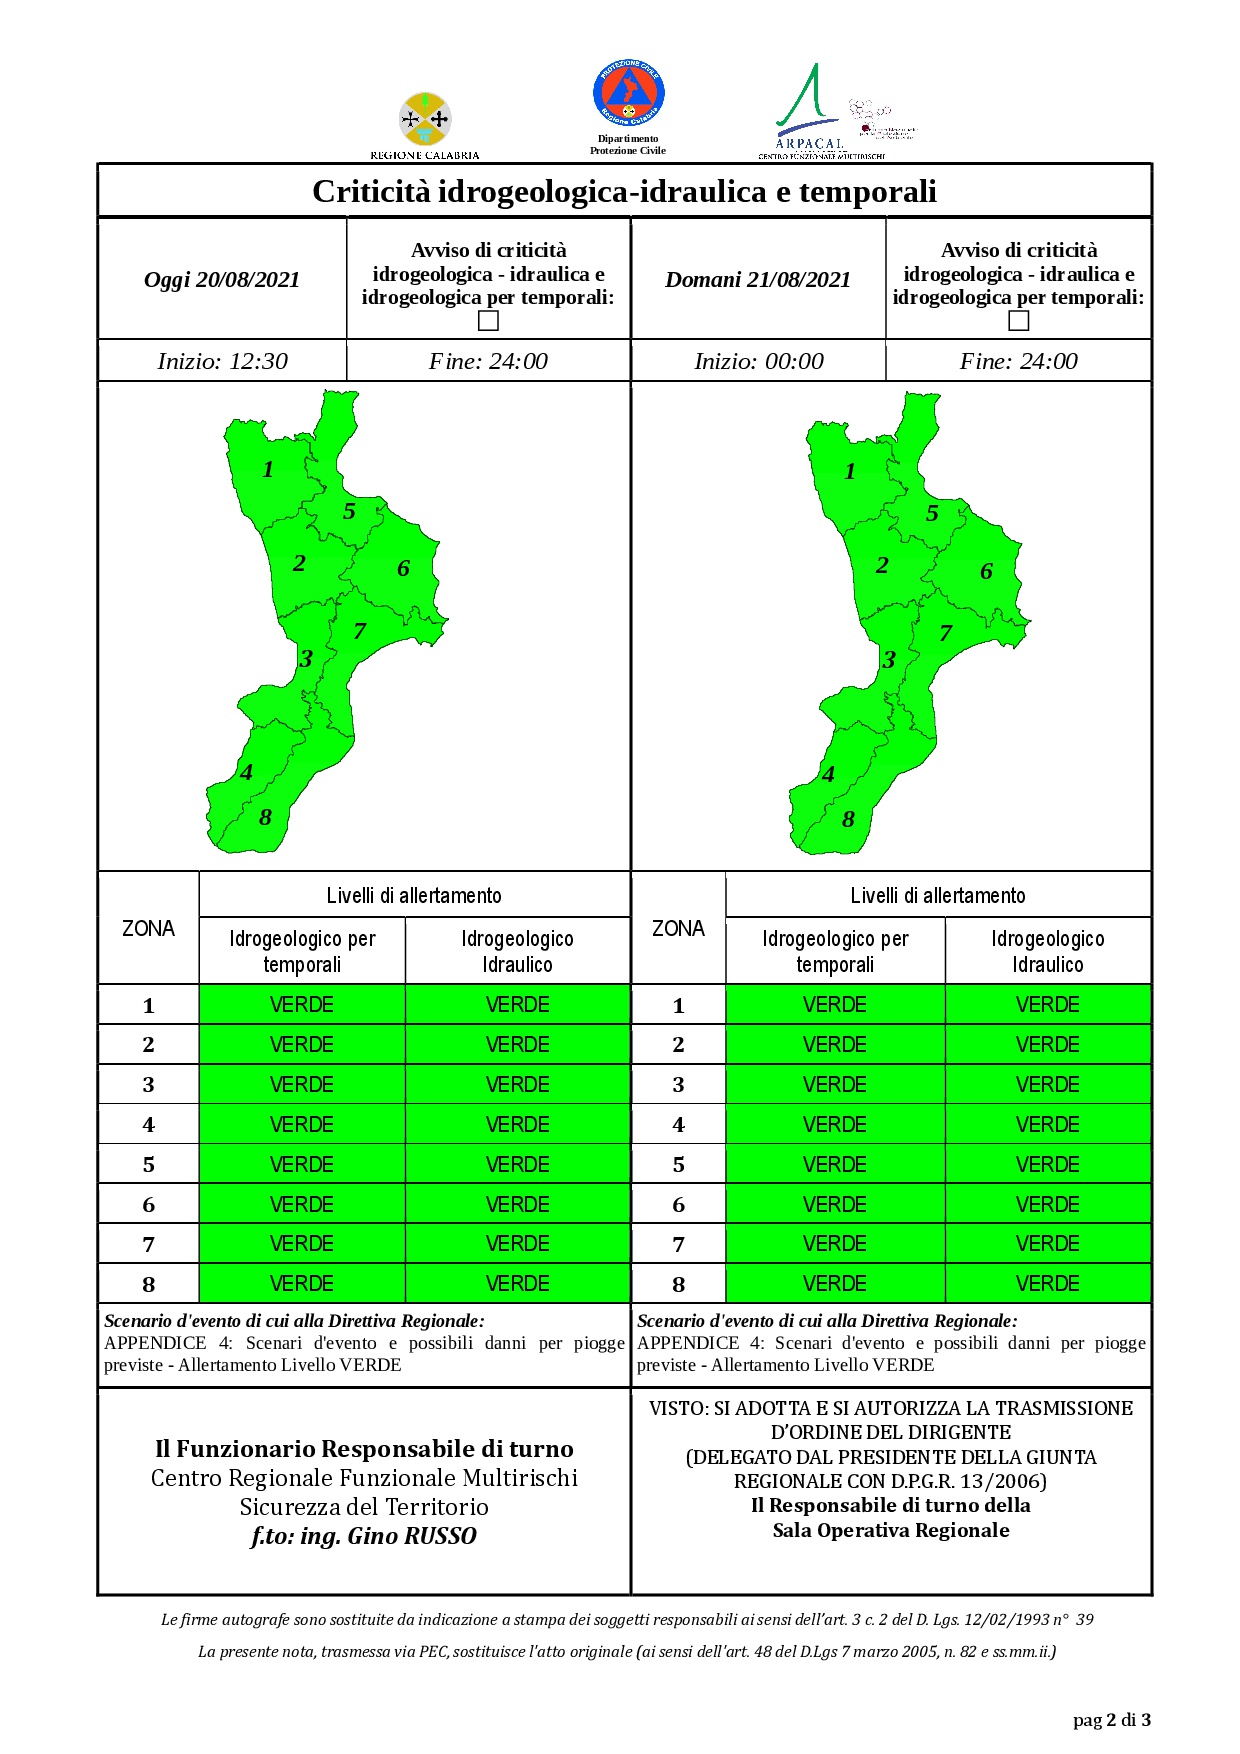 Criticità idrogeologica-idraulica e temporali in Calabria 20-08-2021